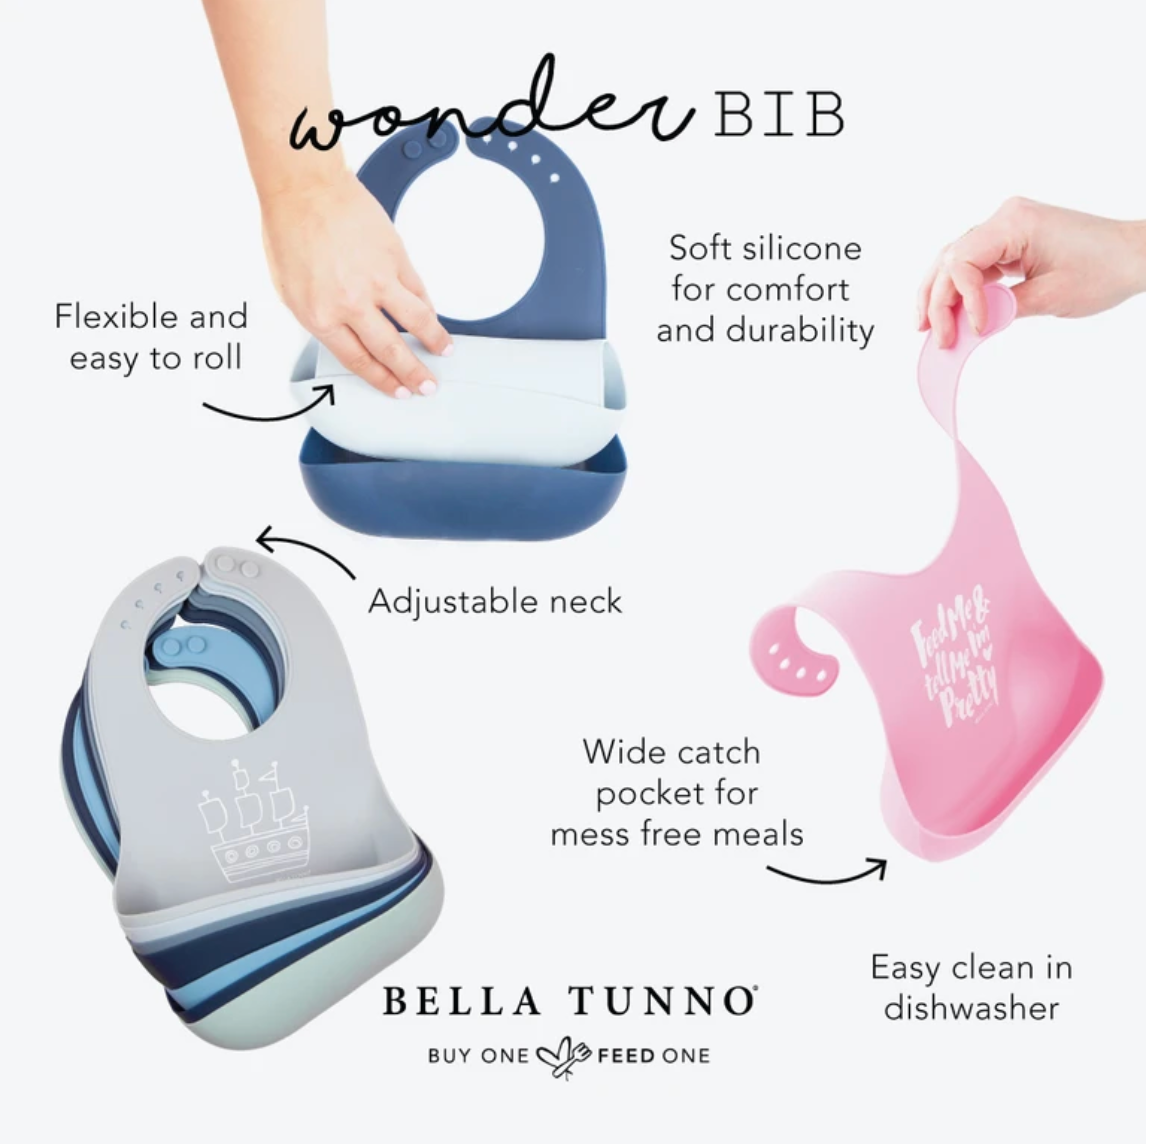 Bella Tunno Wonder Bib - Many Designs